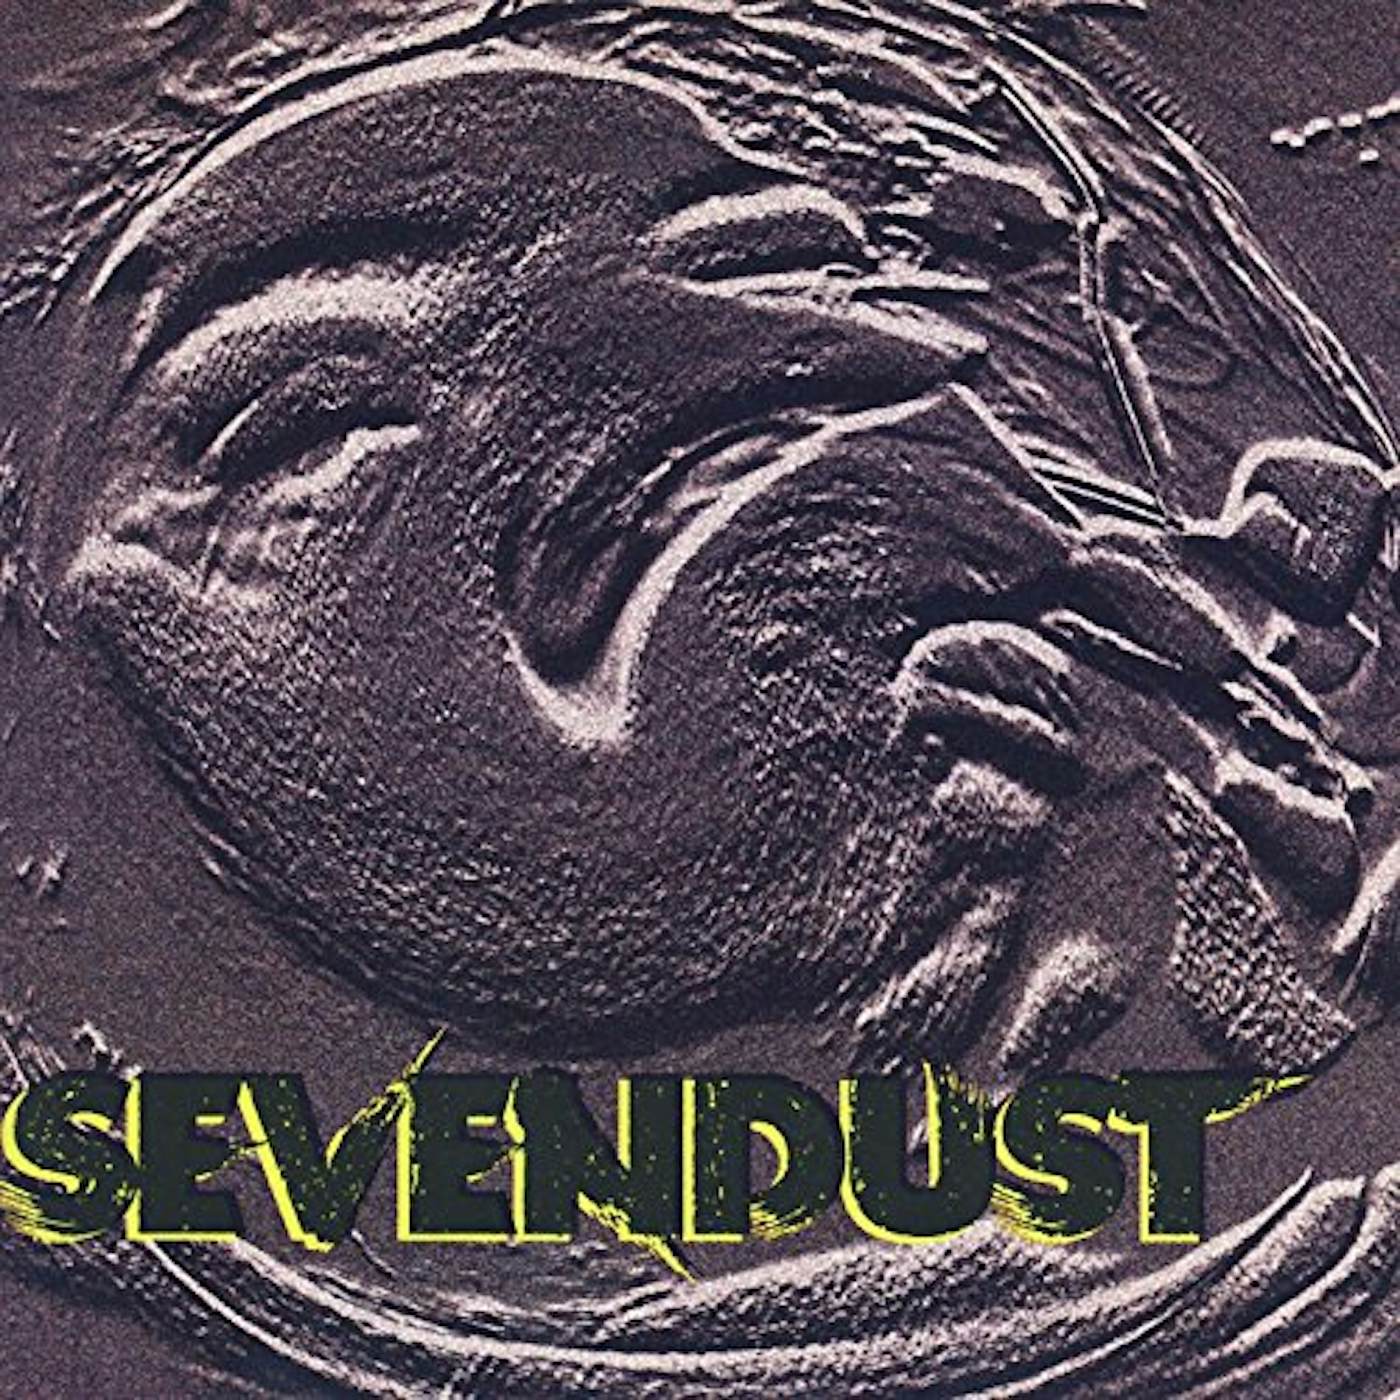 Sevendust Vinyl Record